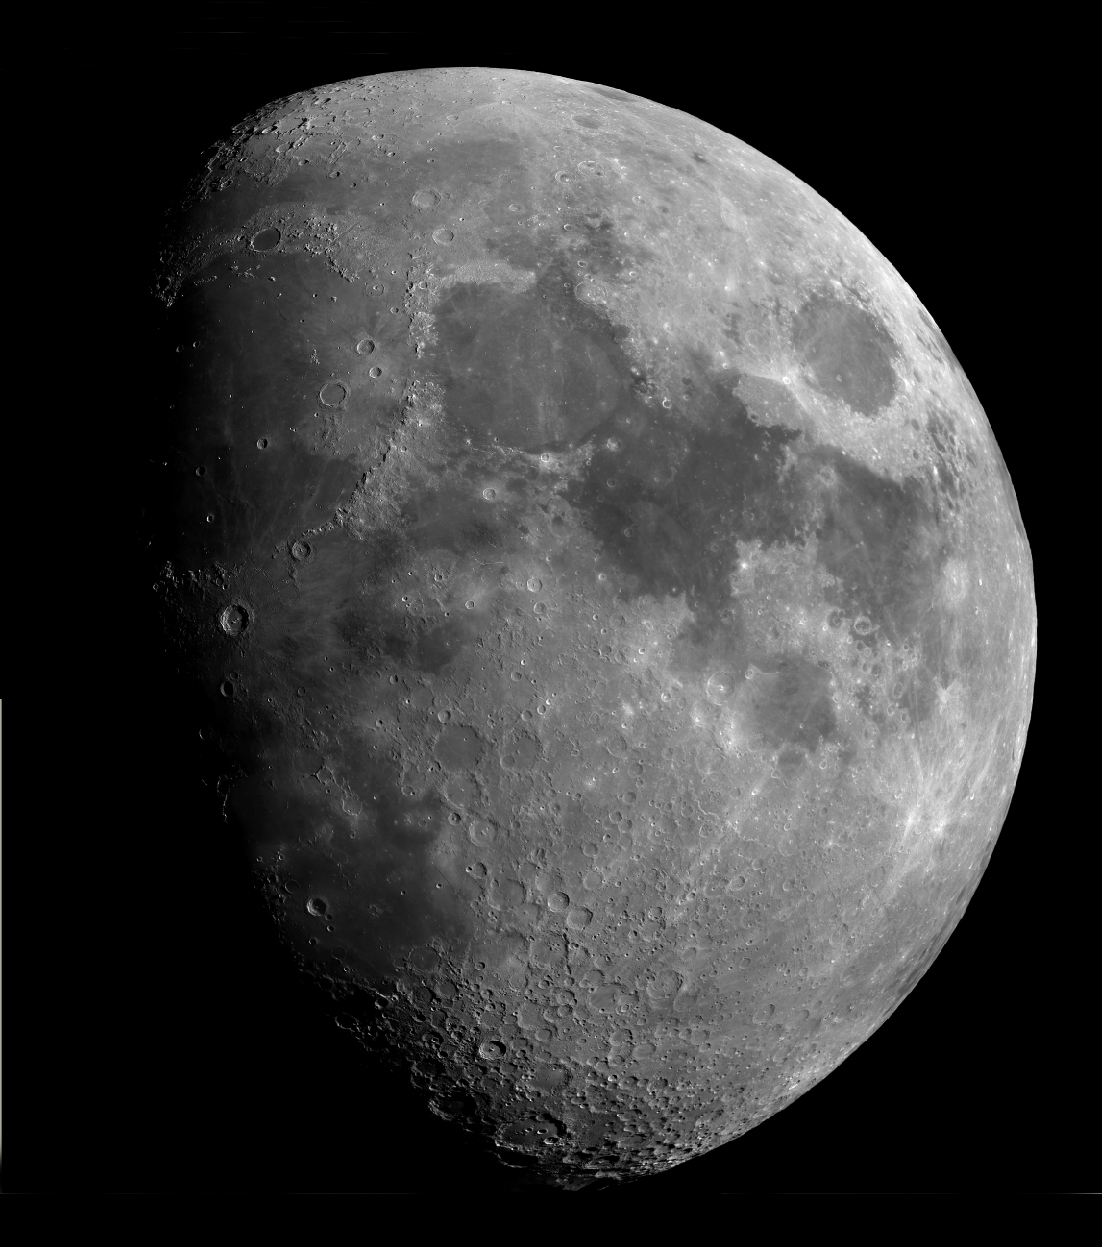 World record Lunar Image